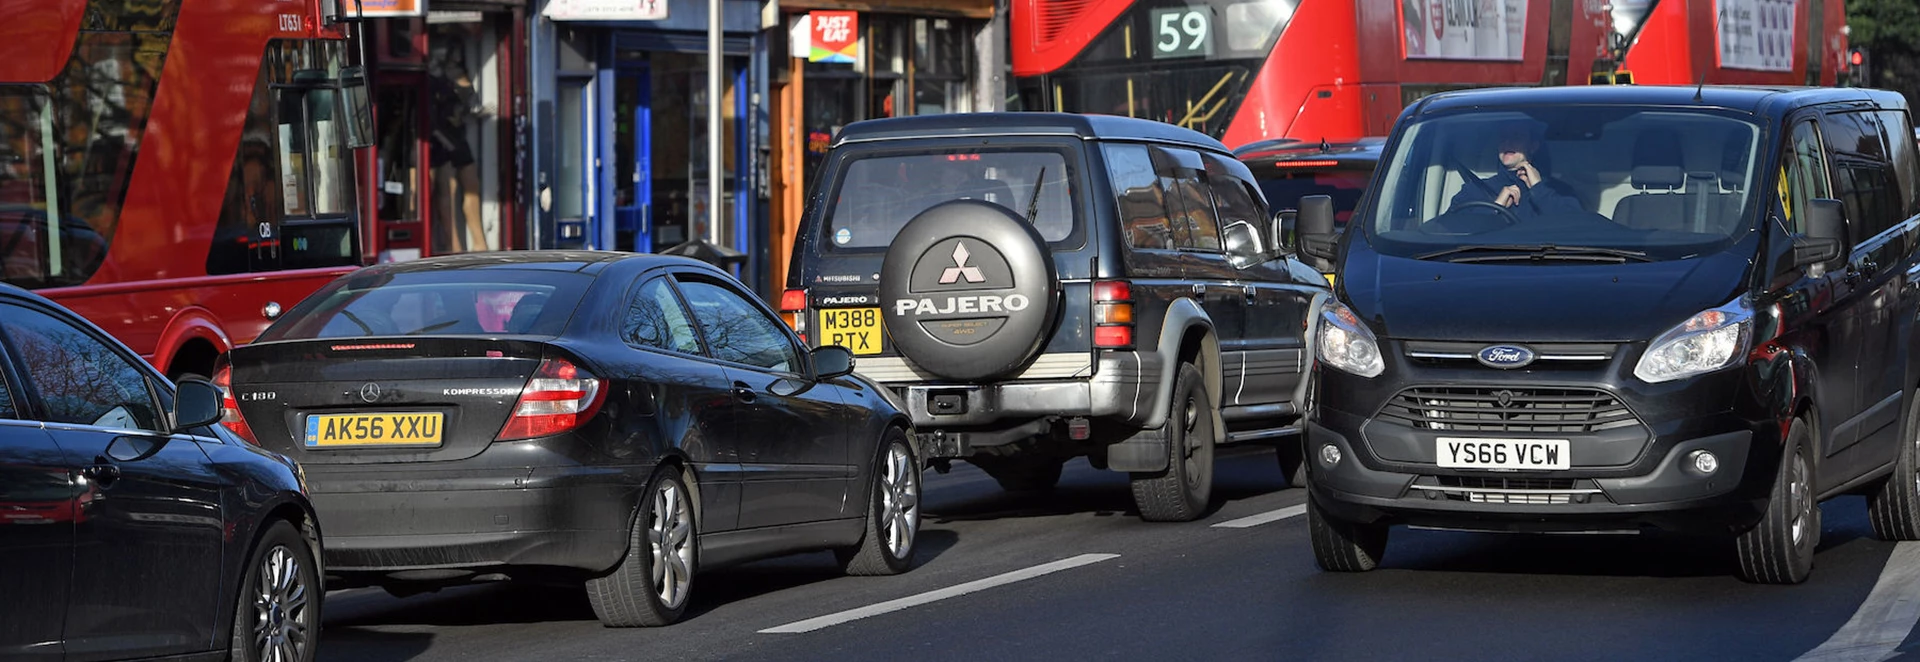 Autonomous cars could see Brits escape to suburbs 